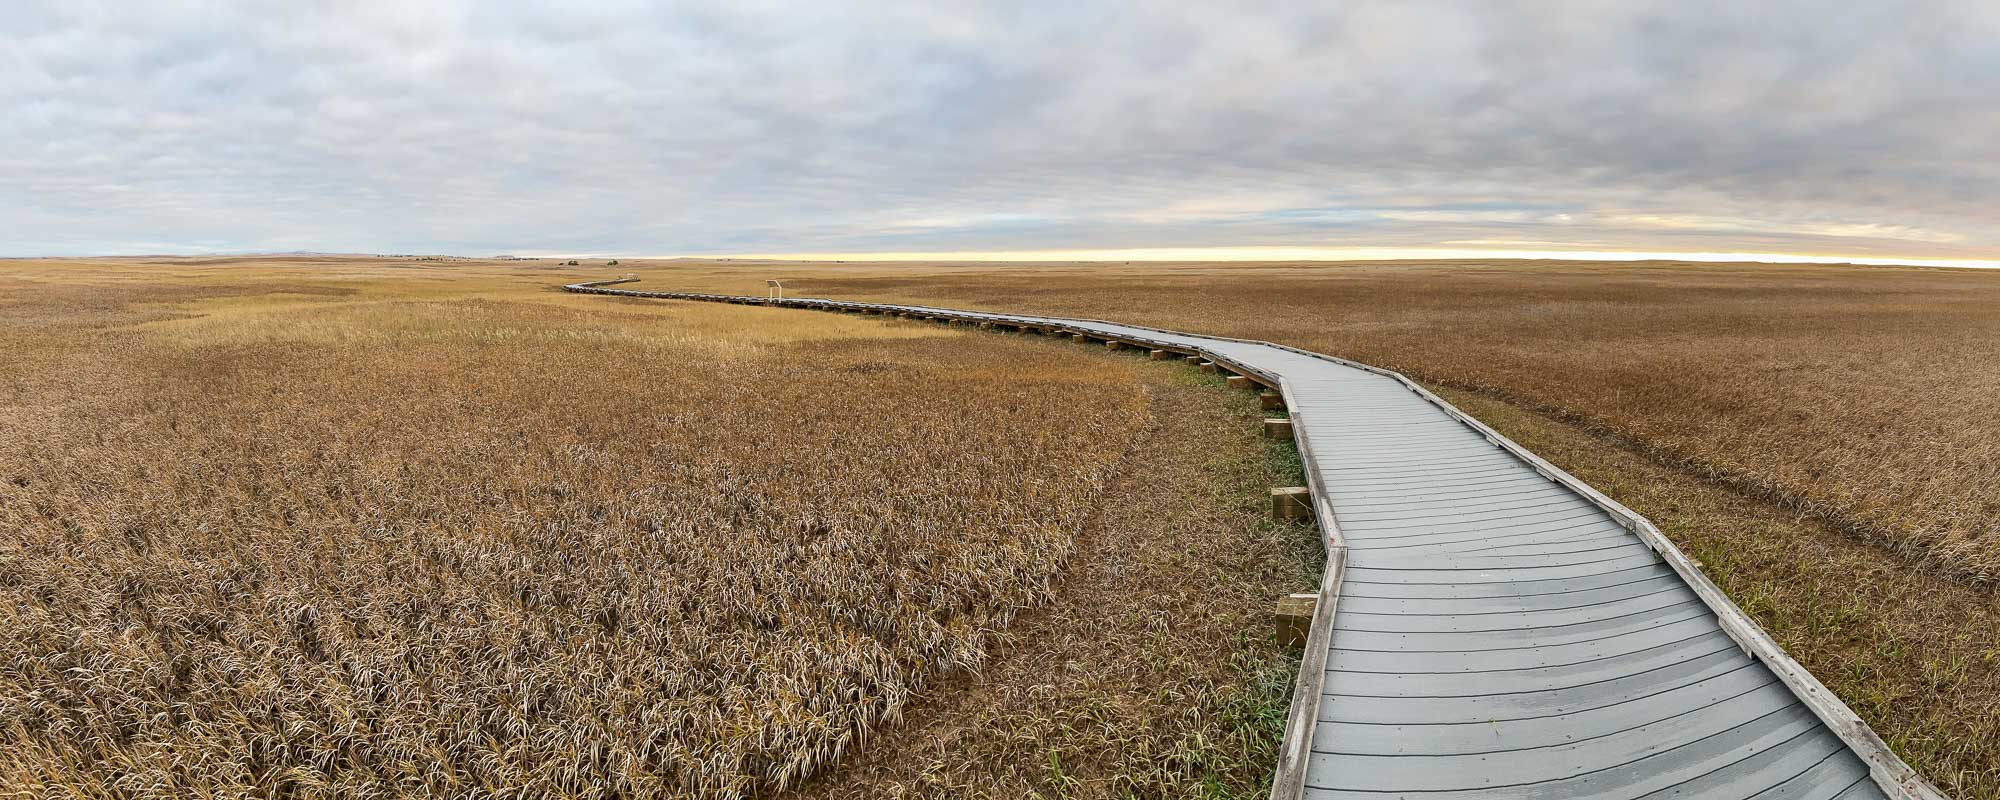 Prairie Wind Overlook boardwalk panorama in Badlands National Park, South Dakota